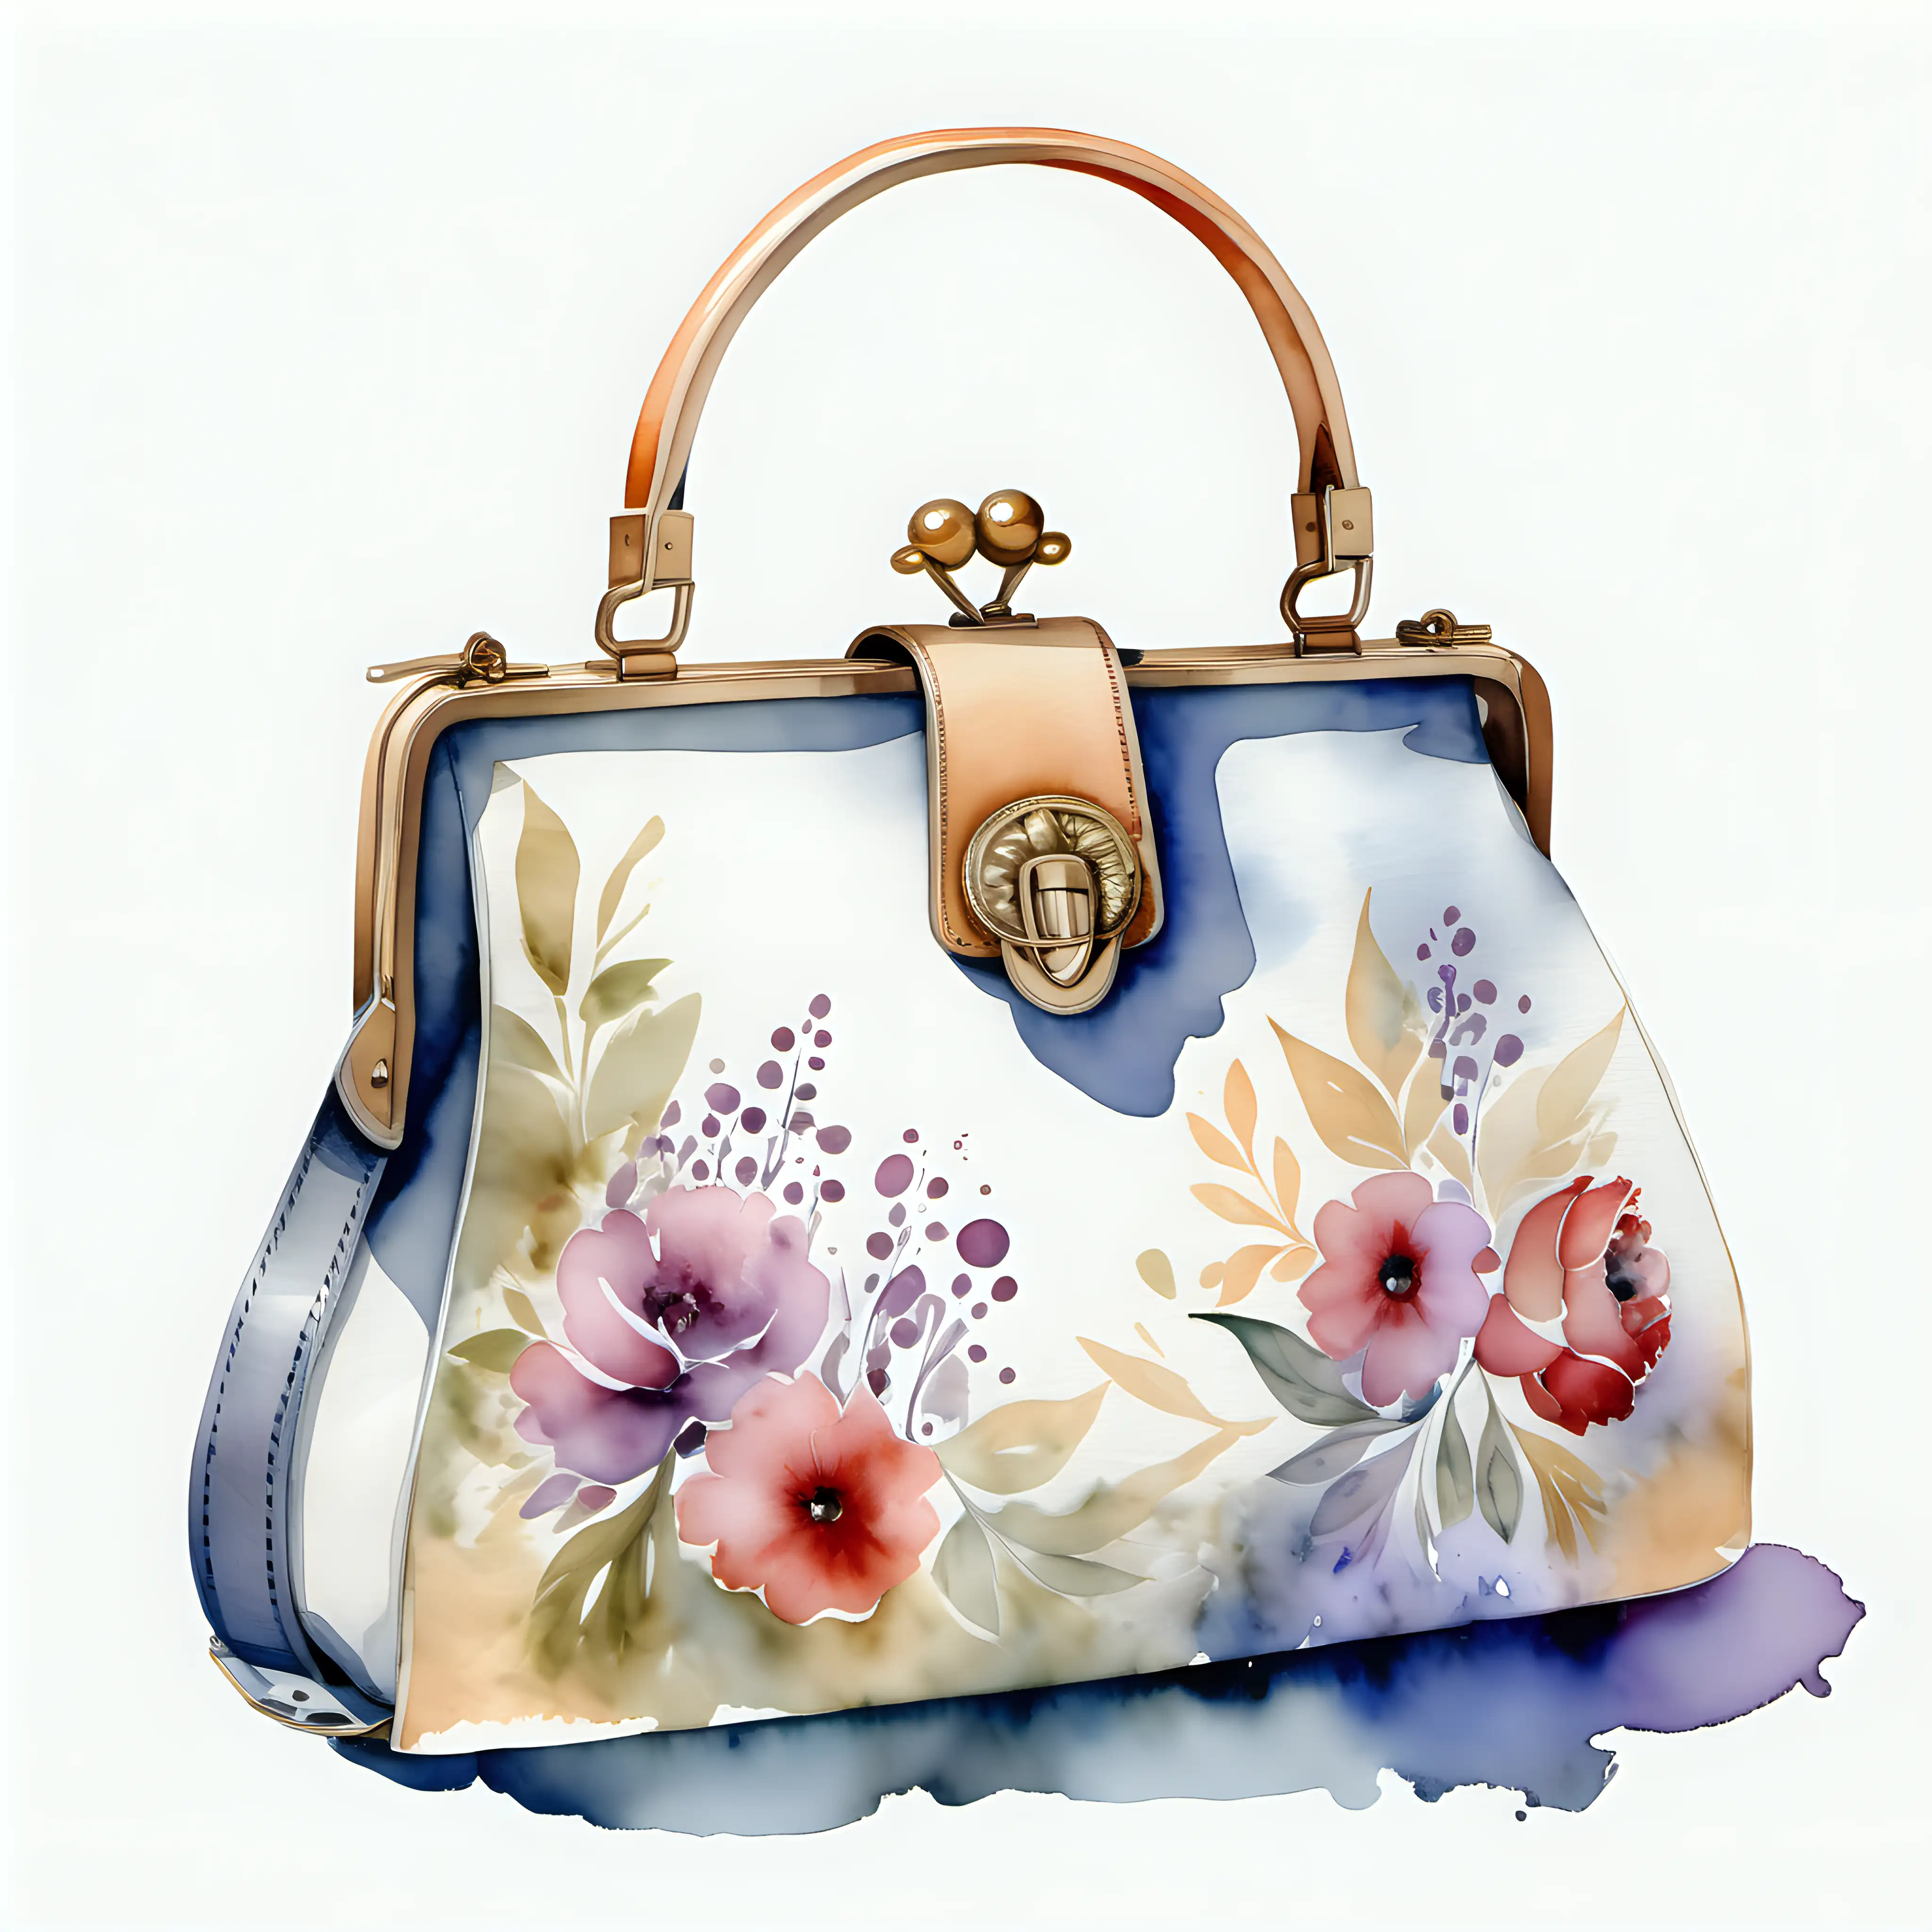 Elegant Watercolor Painting of a Beautiful French Handbag